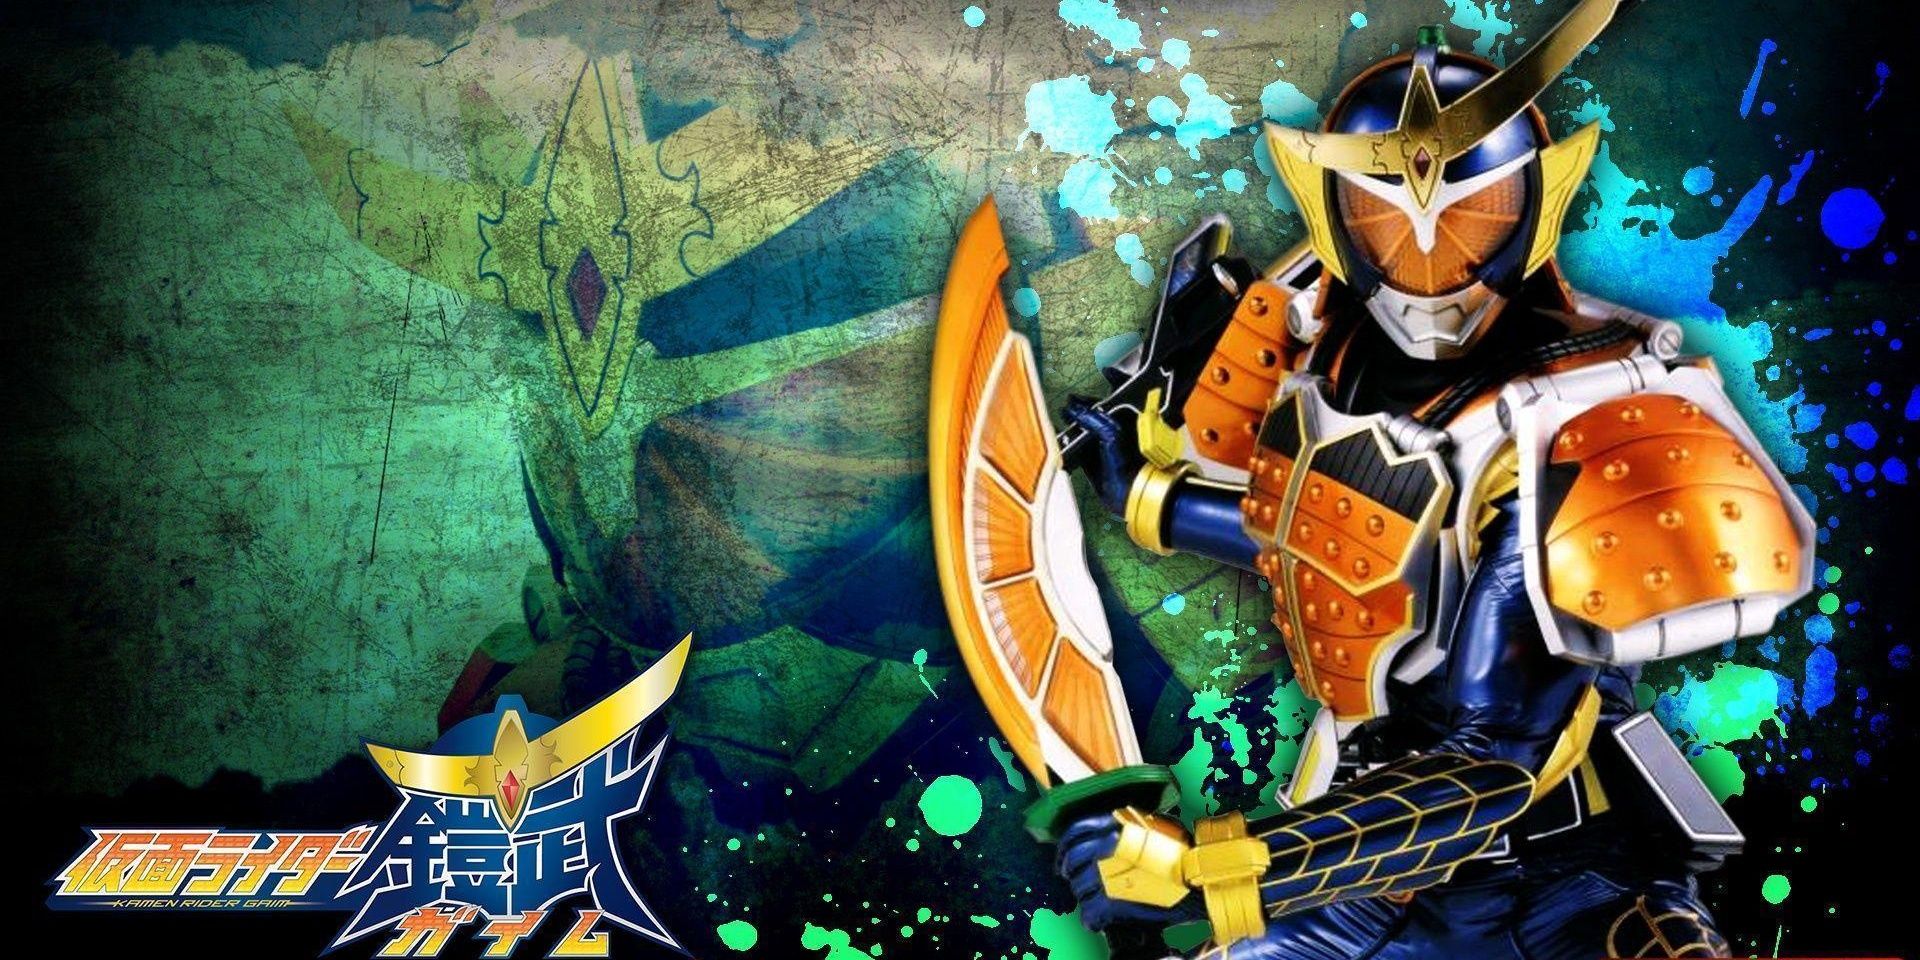 Kamen Rider Gaim in an advertisement for the series